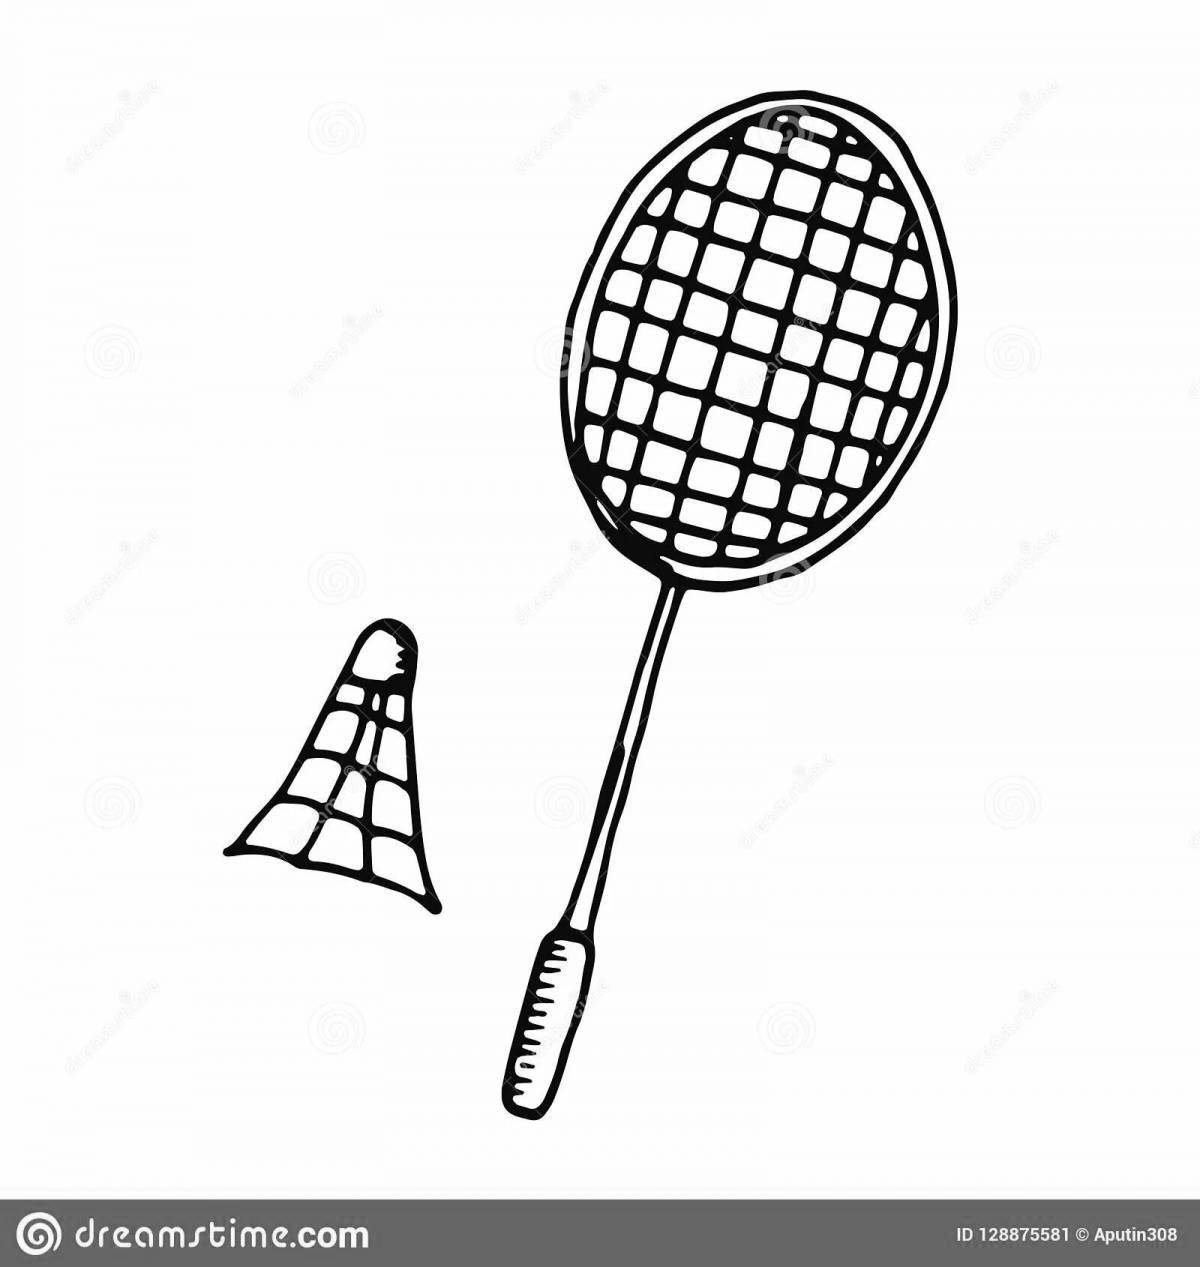 Animated badminton coloring book